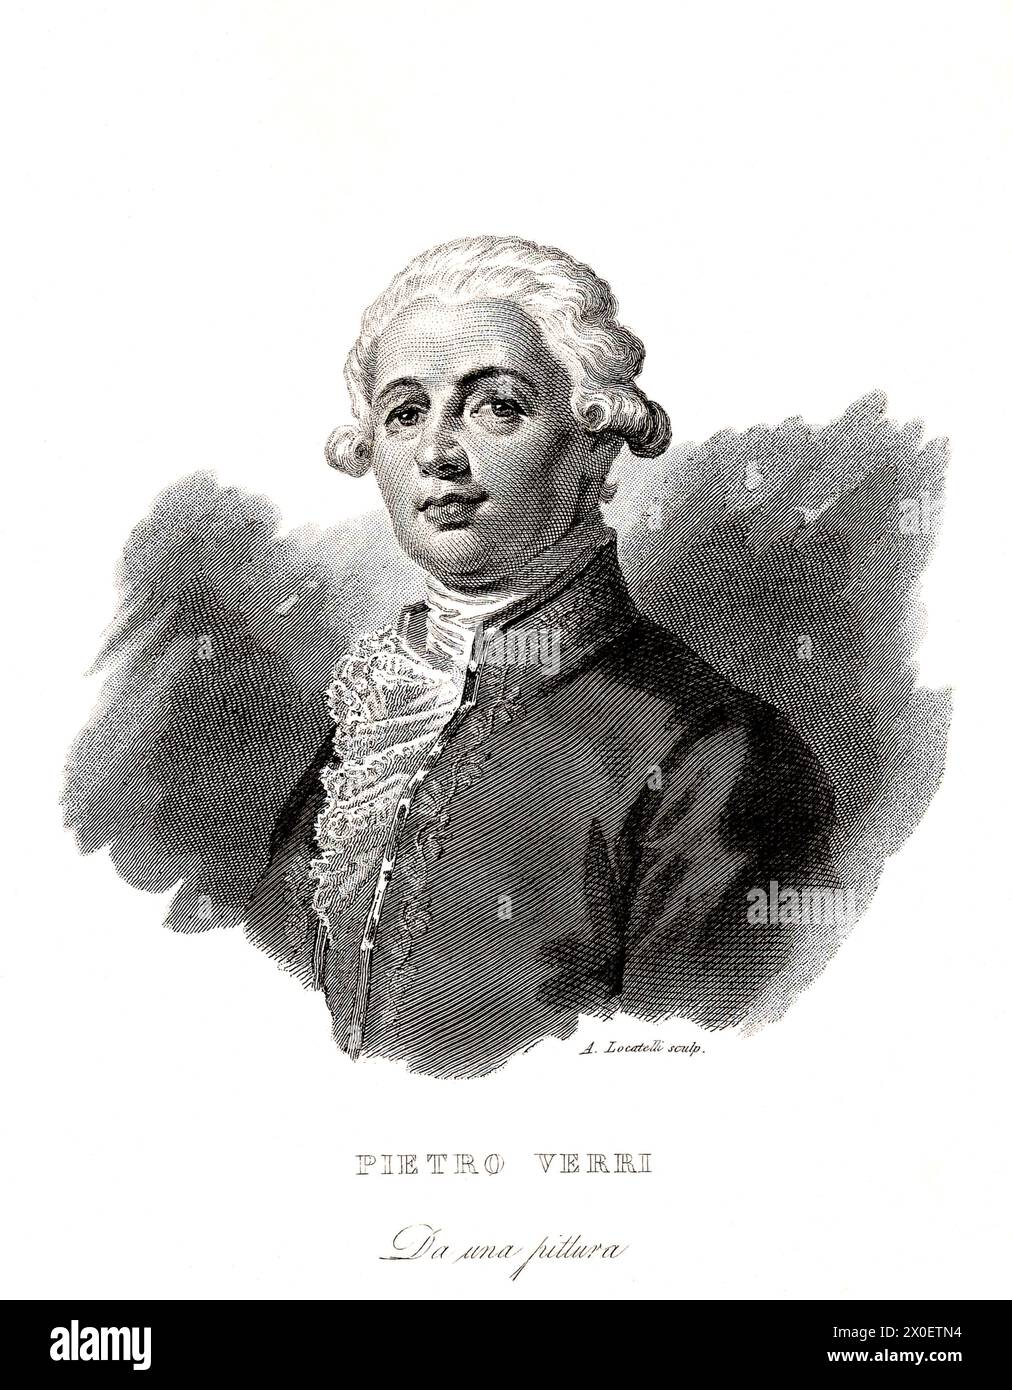 1765 c., Milan , ITALIE : le noble illuministe italien , écrivain , économiste , philosophe et historien PIETRO VERRI ( 1728 - 1797 ) . Portrait gravé par Antonio Locatelli , XIXe siècle . - CONTE - ILLUMINISMO - ILLUMINISM - ILLUMINISTA - HISTOIRE - FOTO STORICHE - ITALIA - ECONOMIE - ECONOMISTA - FILOSOFIA - PHILOSOPHIE - FILOSOFO - SCRITTORE - LETTERATURA - STORICO - LITTÉRATURE - LETTERATO - INCISIONE - ILLUSTRAZIONE - GRAVURE ILLUSTRATION - NOBLESSE ITALIENNE - NOBILTÀ ITALIANA - nobile Italiano - perruque - parrucca - pizzo - dentelle - jabout - rouches --- Archivio GBB Banque D'Images